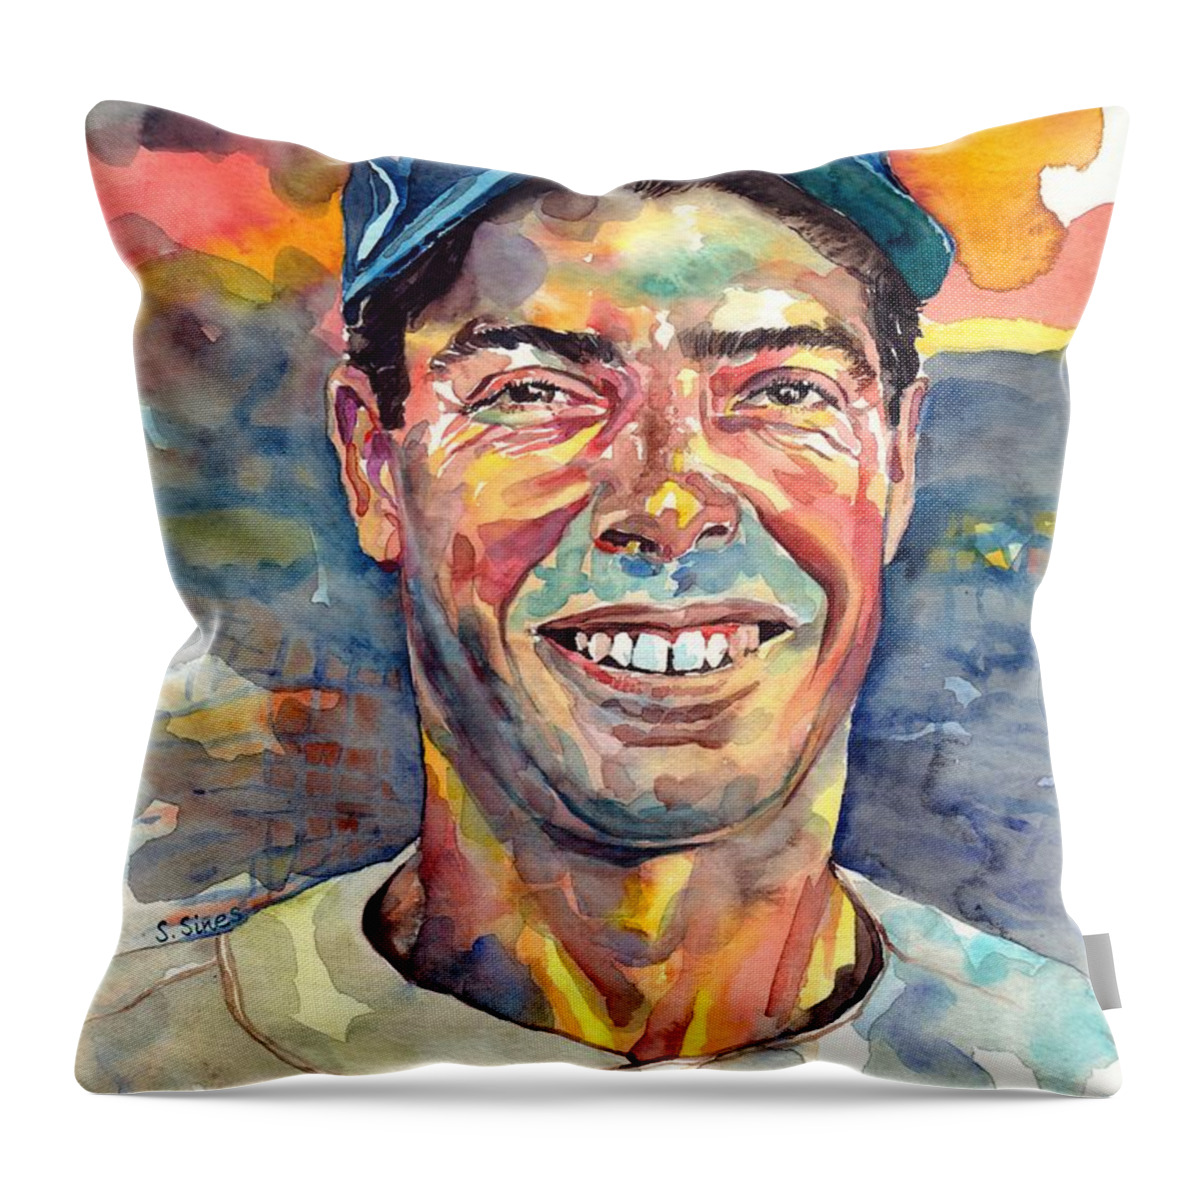 Joe Dimaggio Throw Pillow featuring the painting Joe DiMaggio Portrait by Suzann Sines